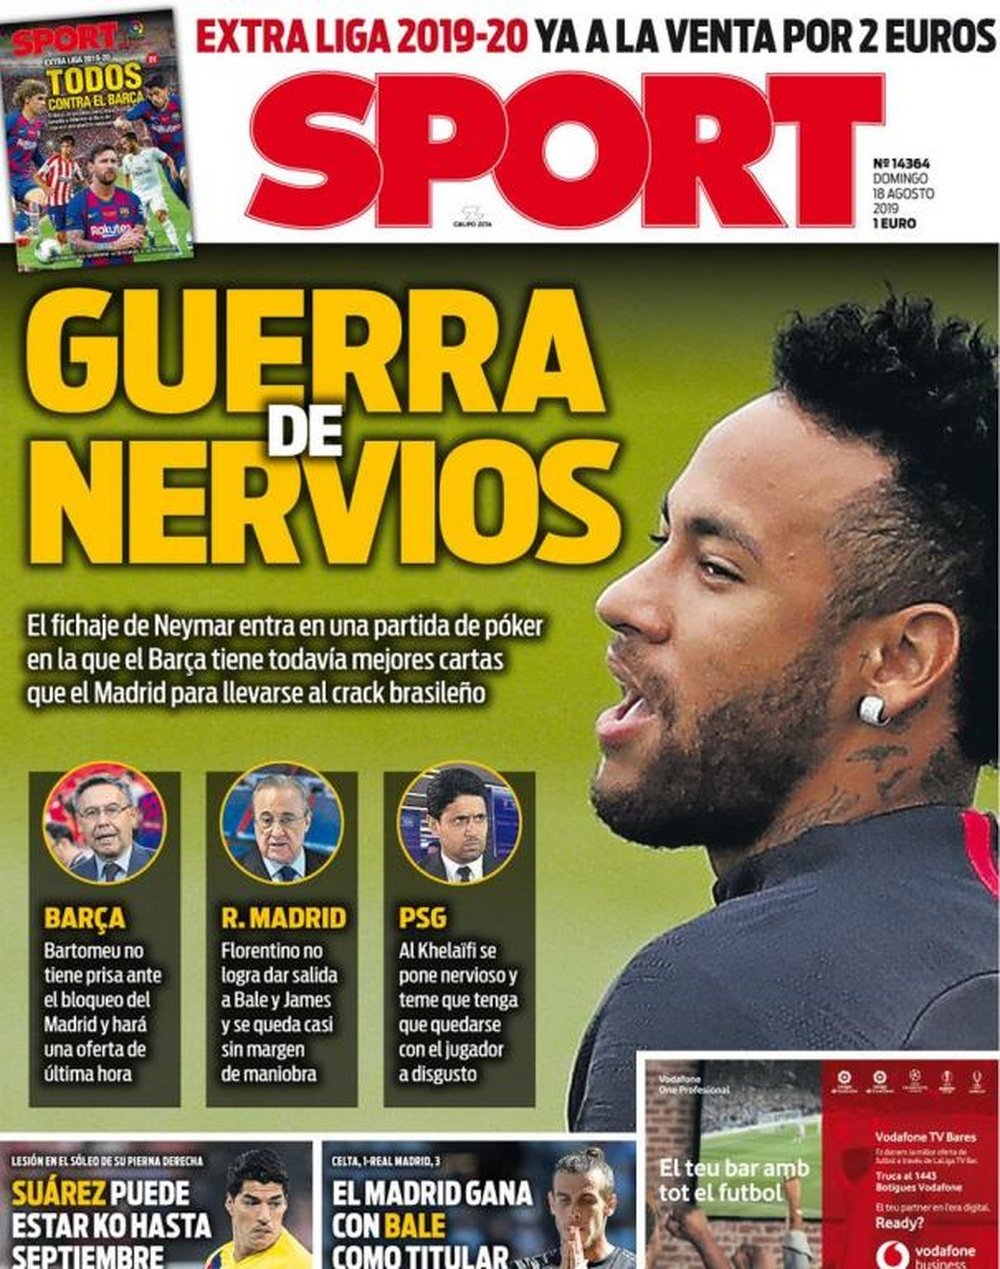 Capa do jornal Sport de 18-08-19. Sport